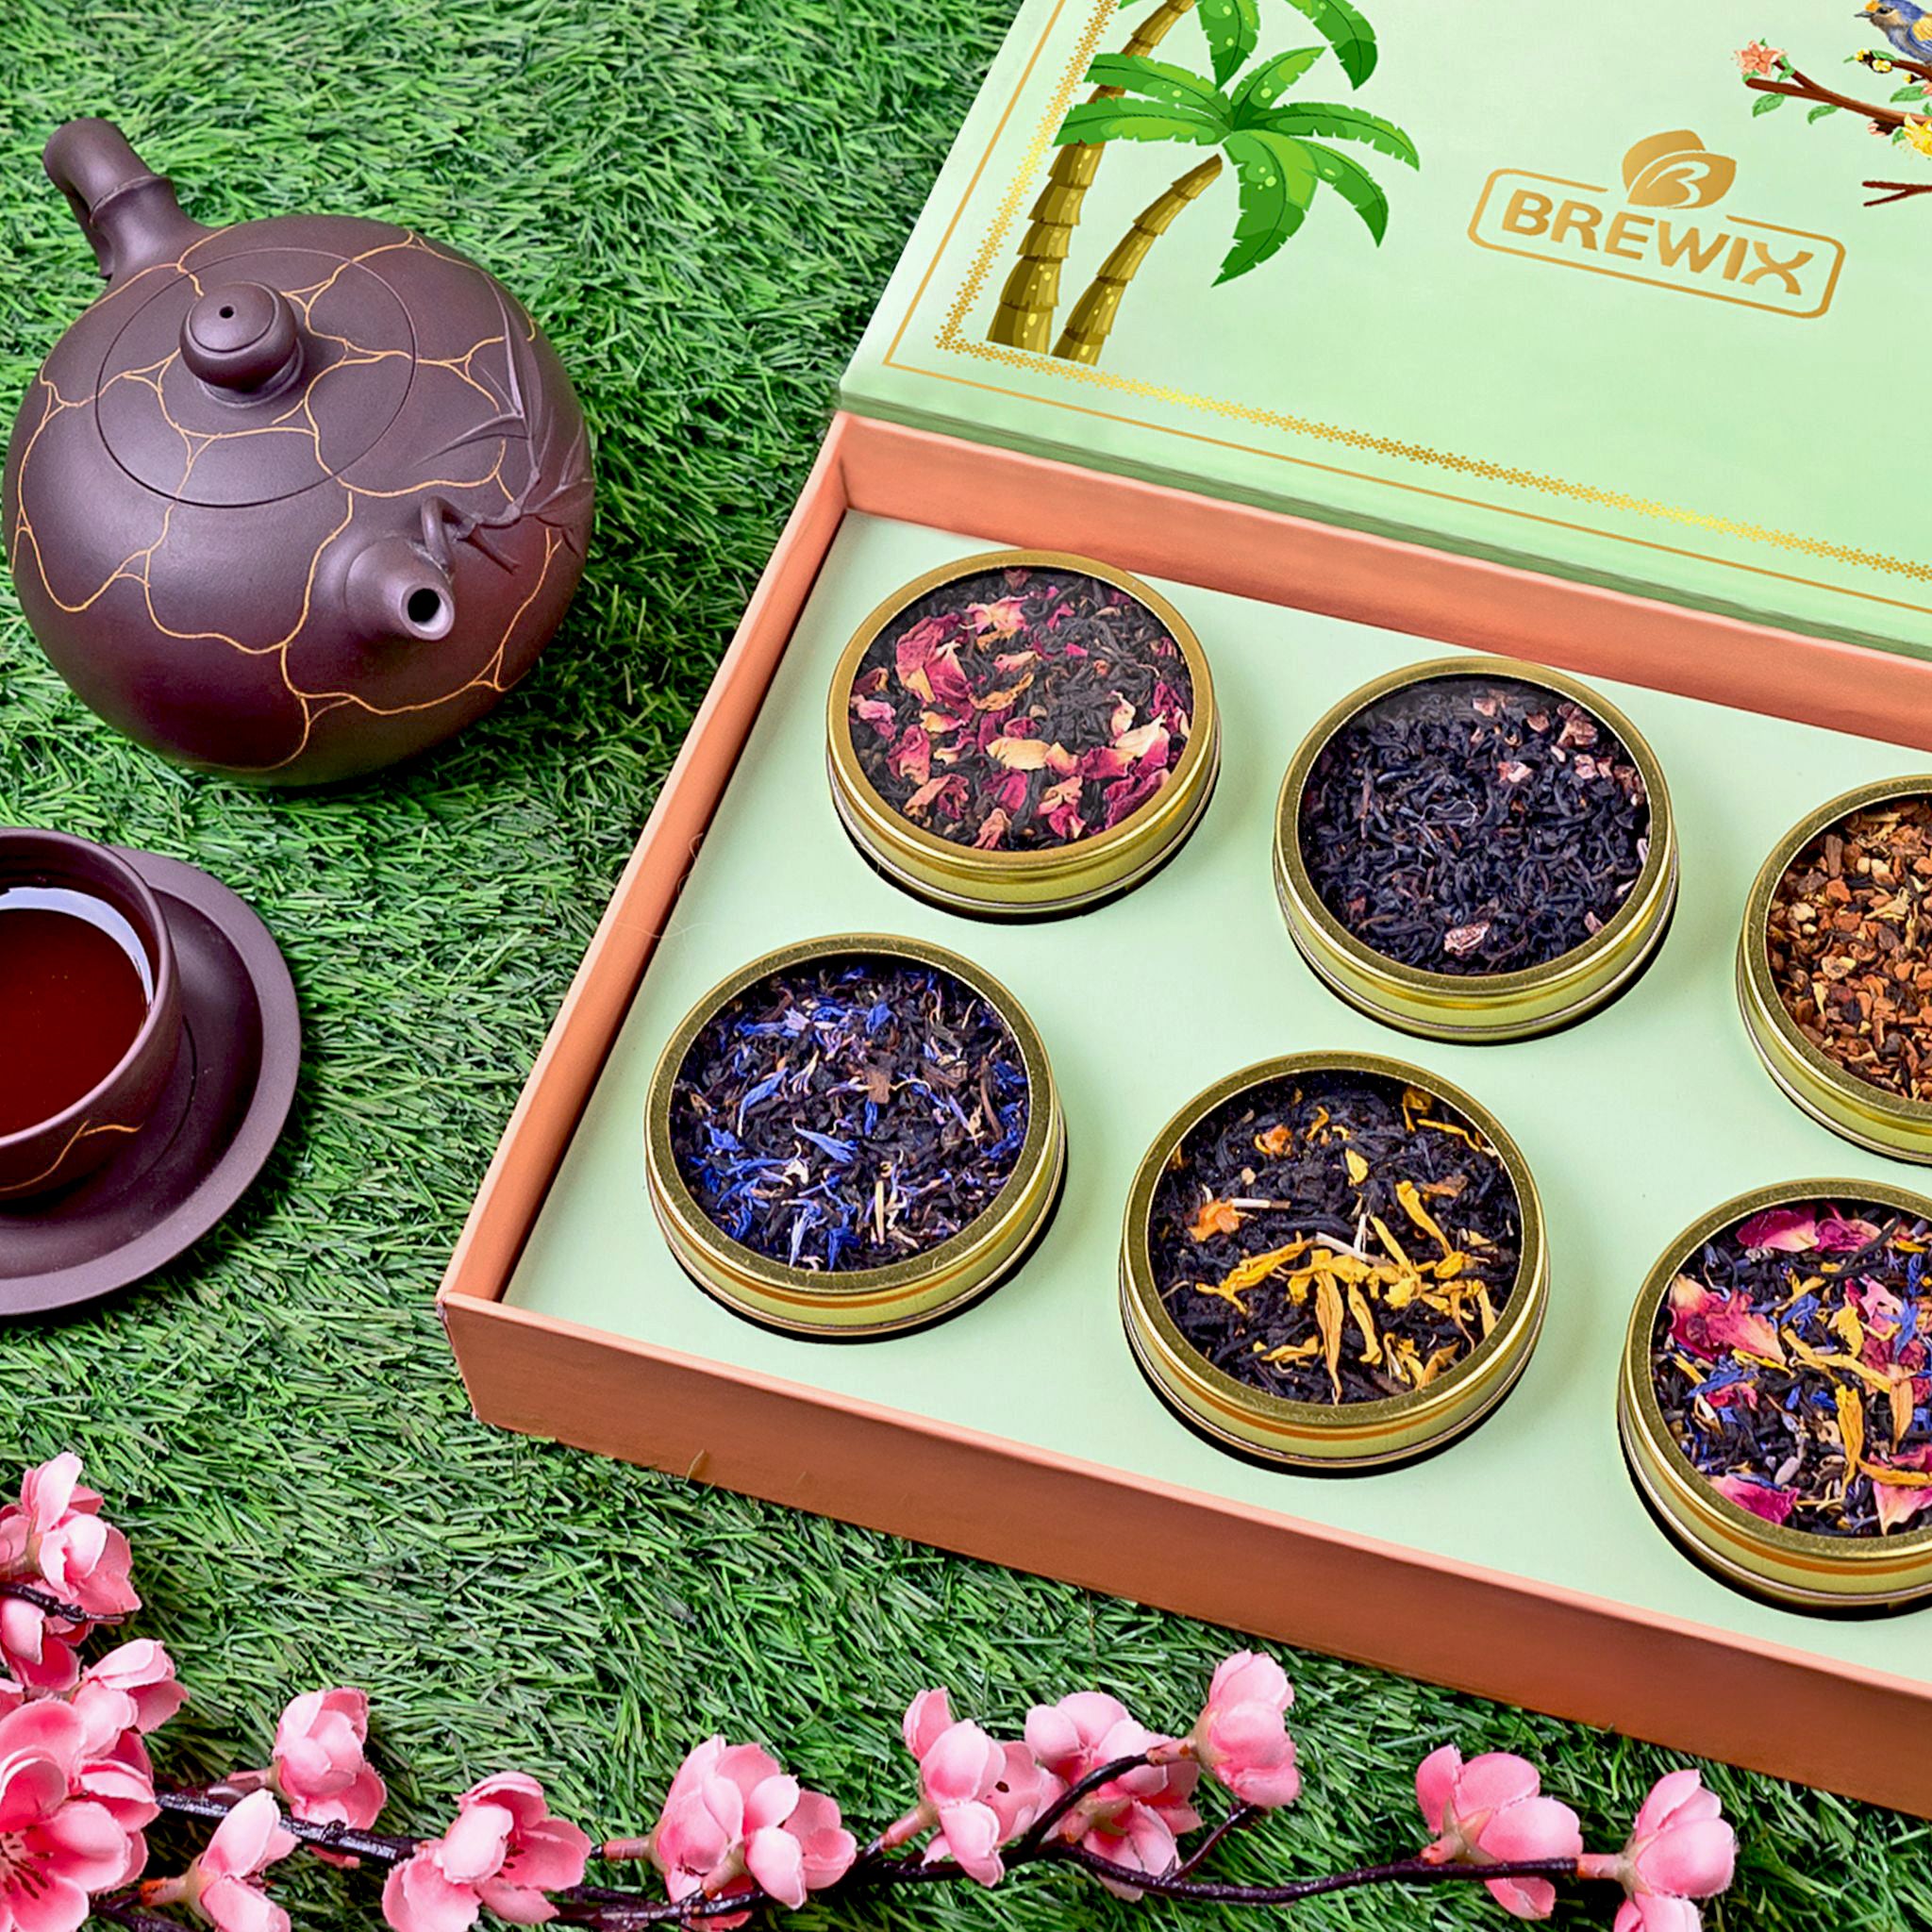 Discover Bliss Herbal Tea Gift Set Box, Set of 6